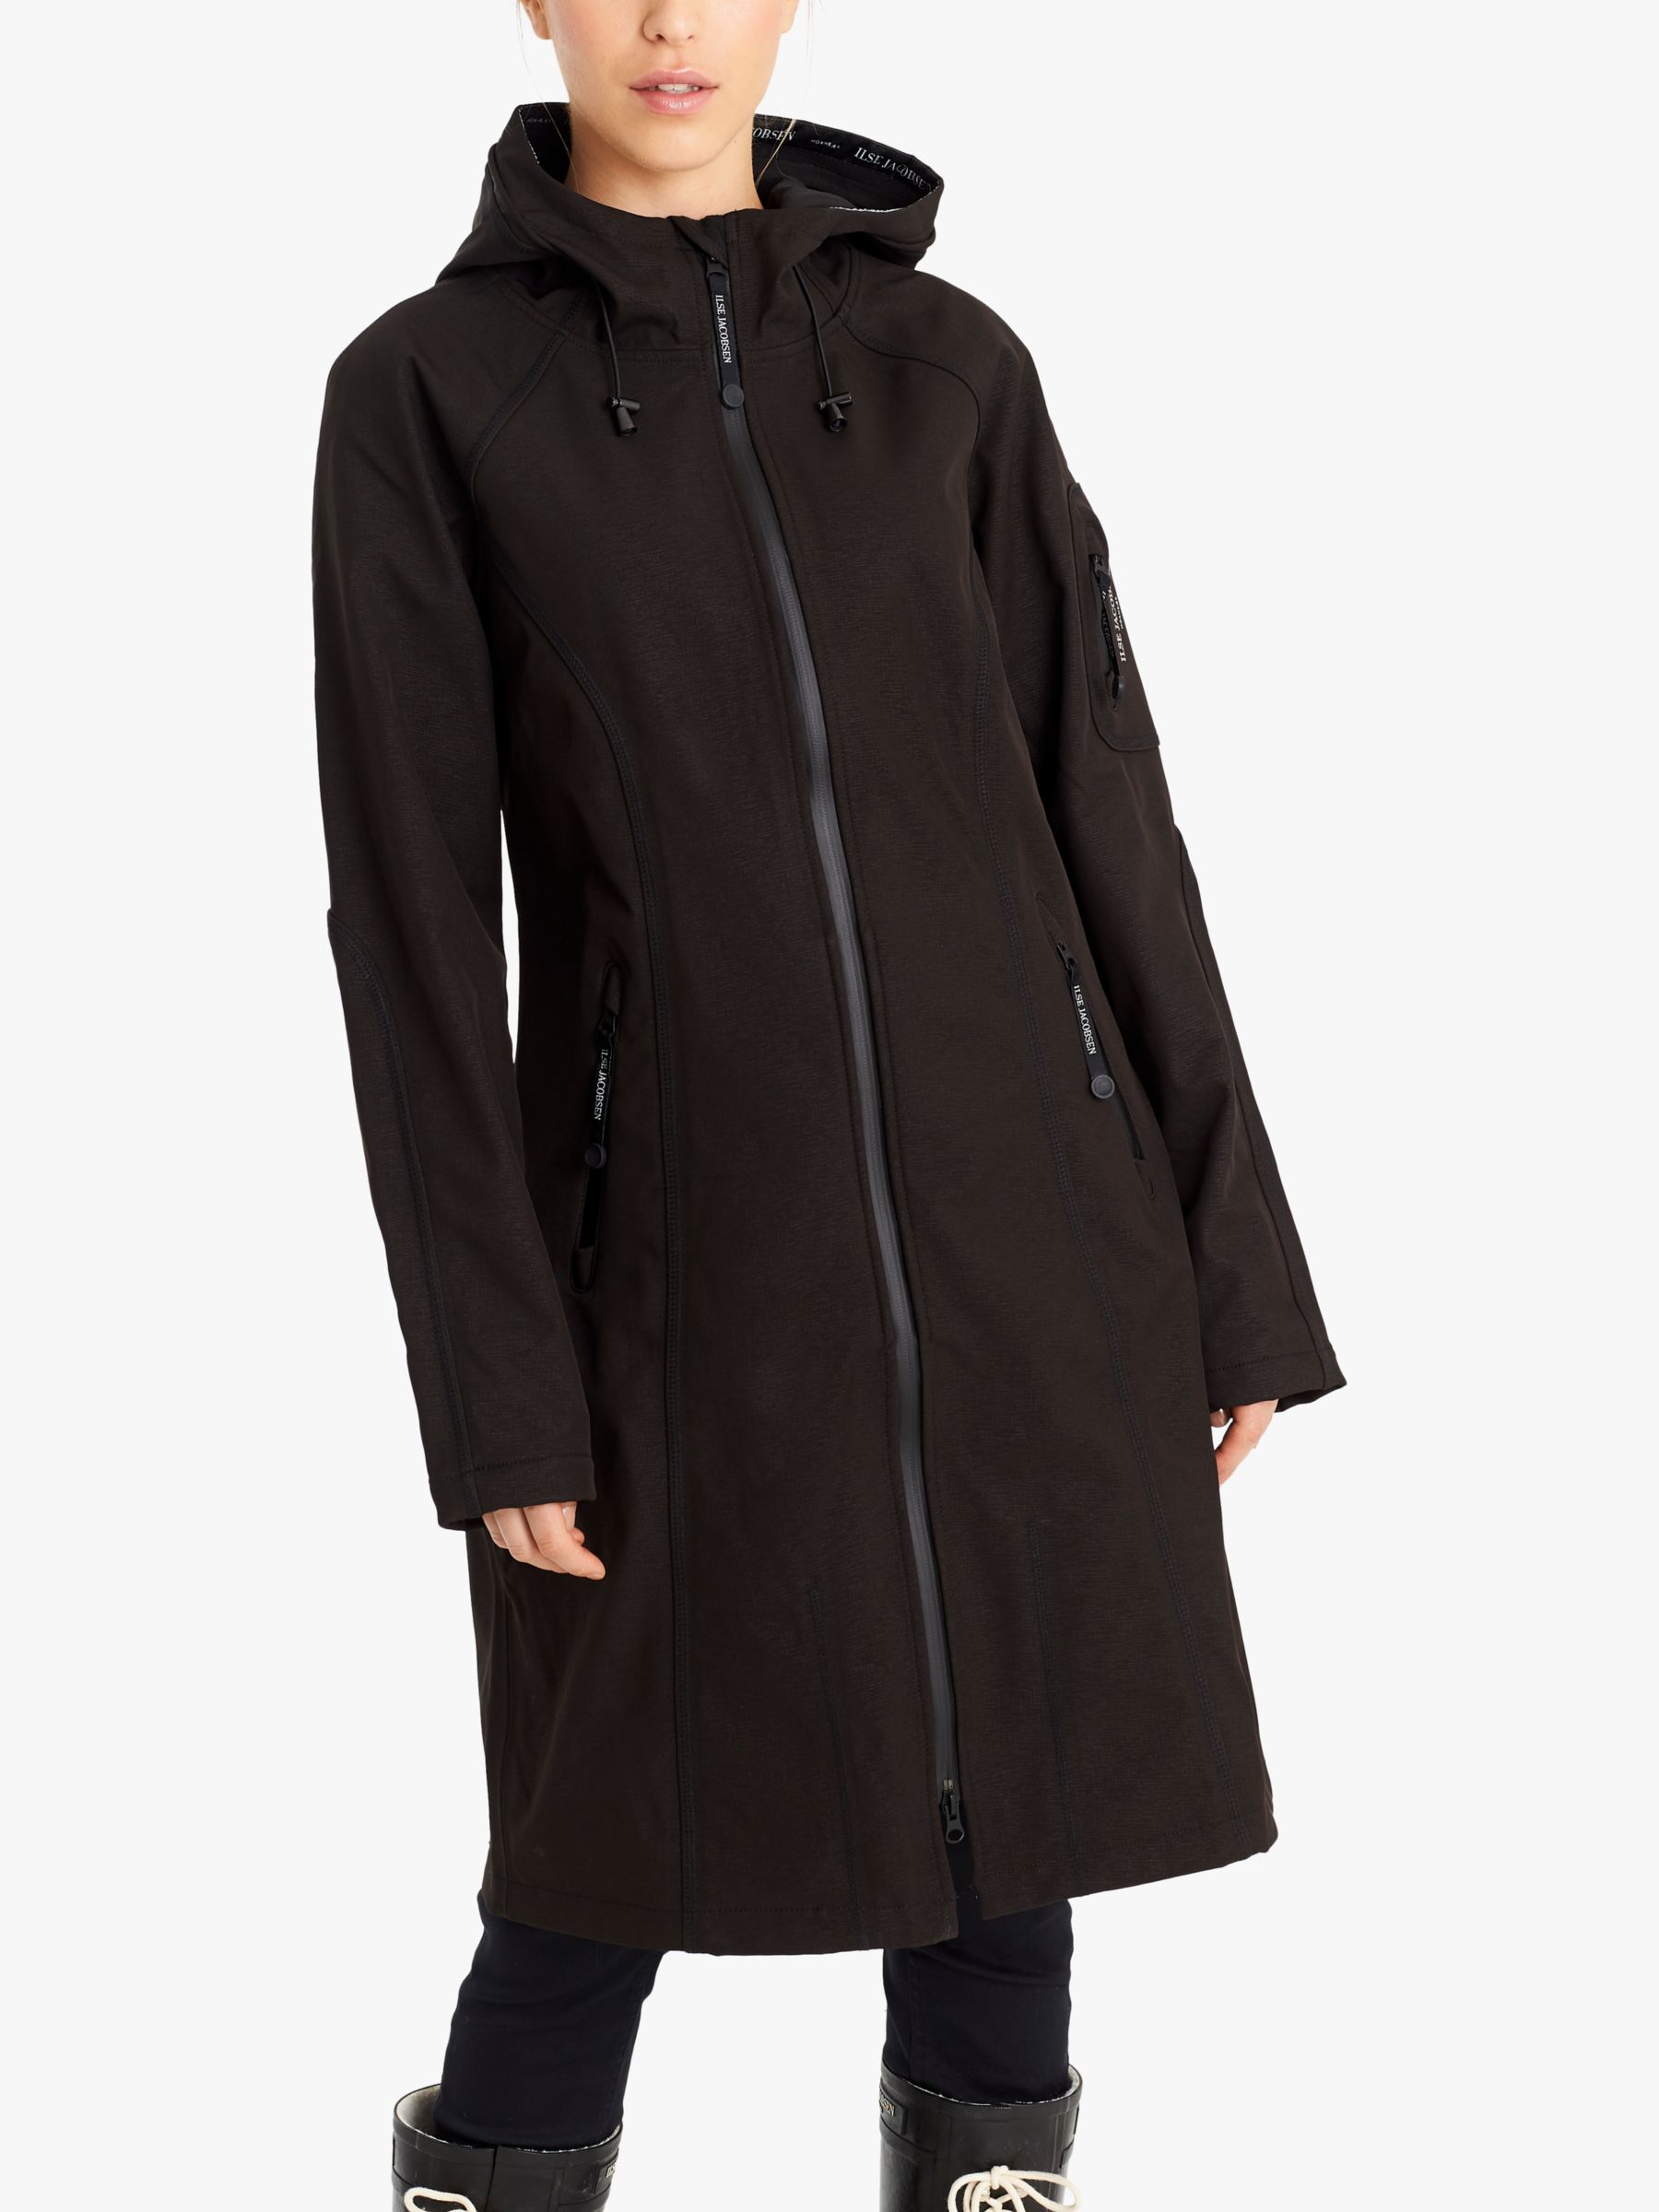 Ilse Jacobsen Hornbæk 37 Long Raincoat, Black at John Lewis & Partners